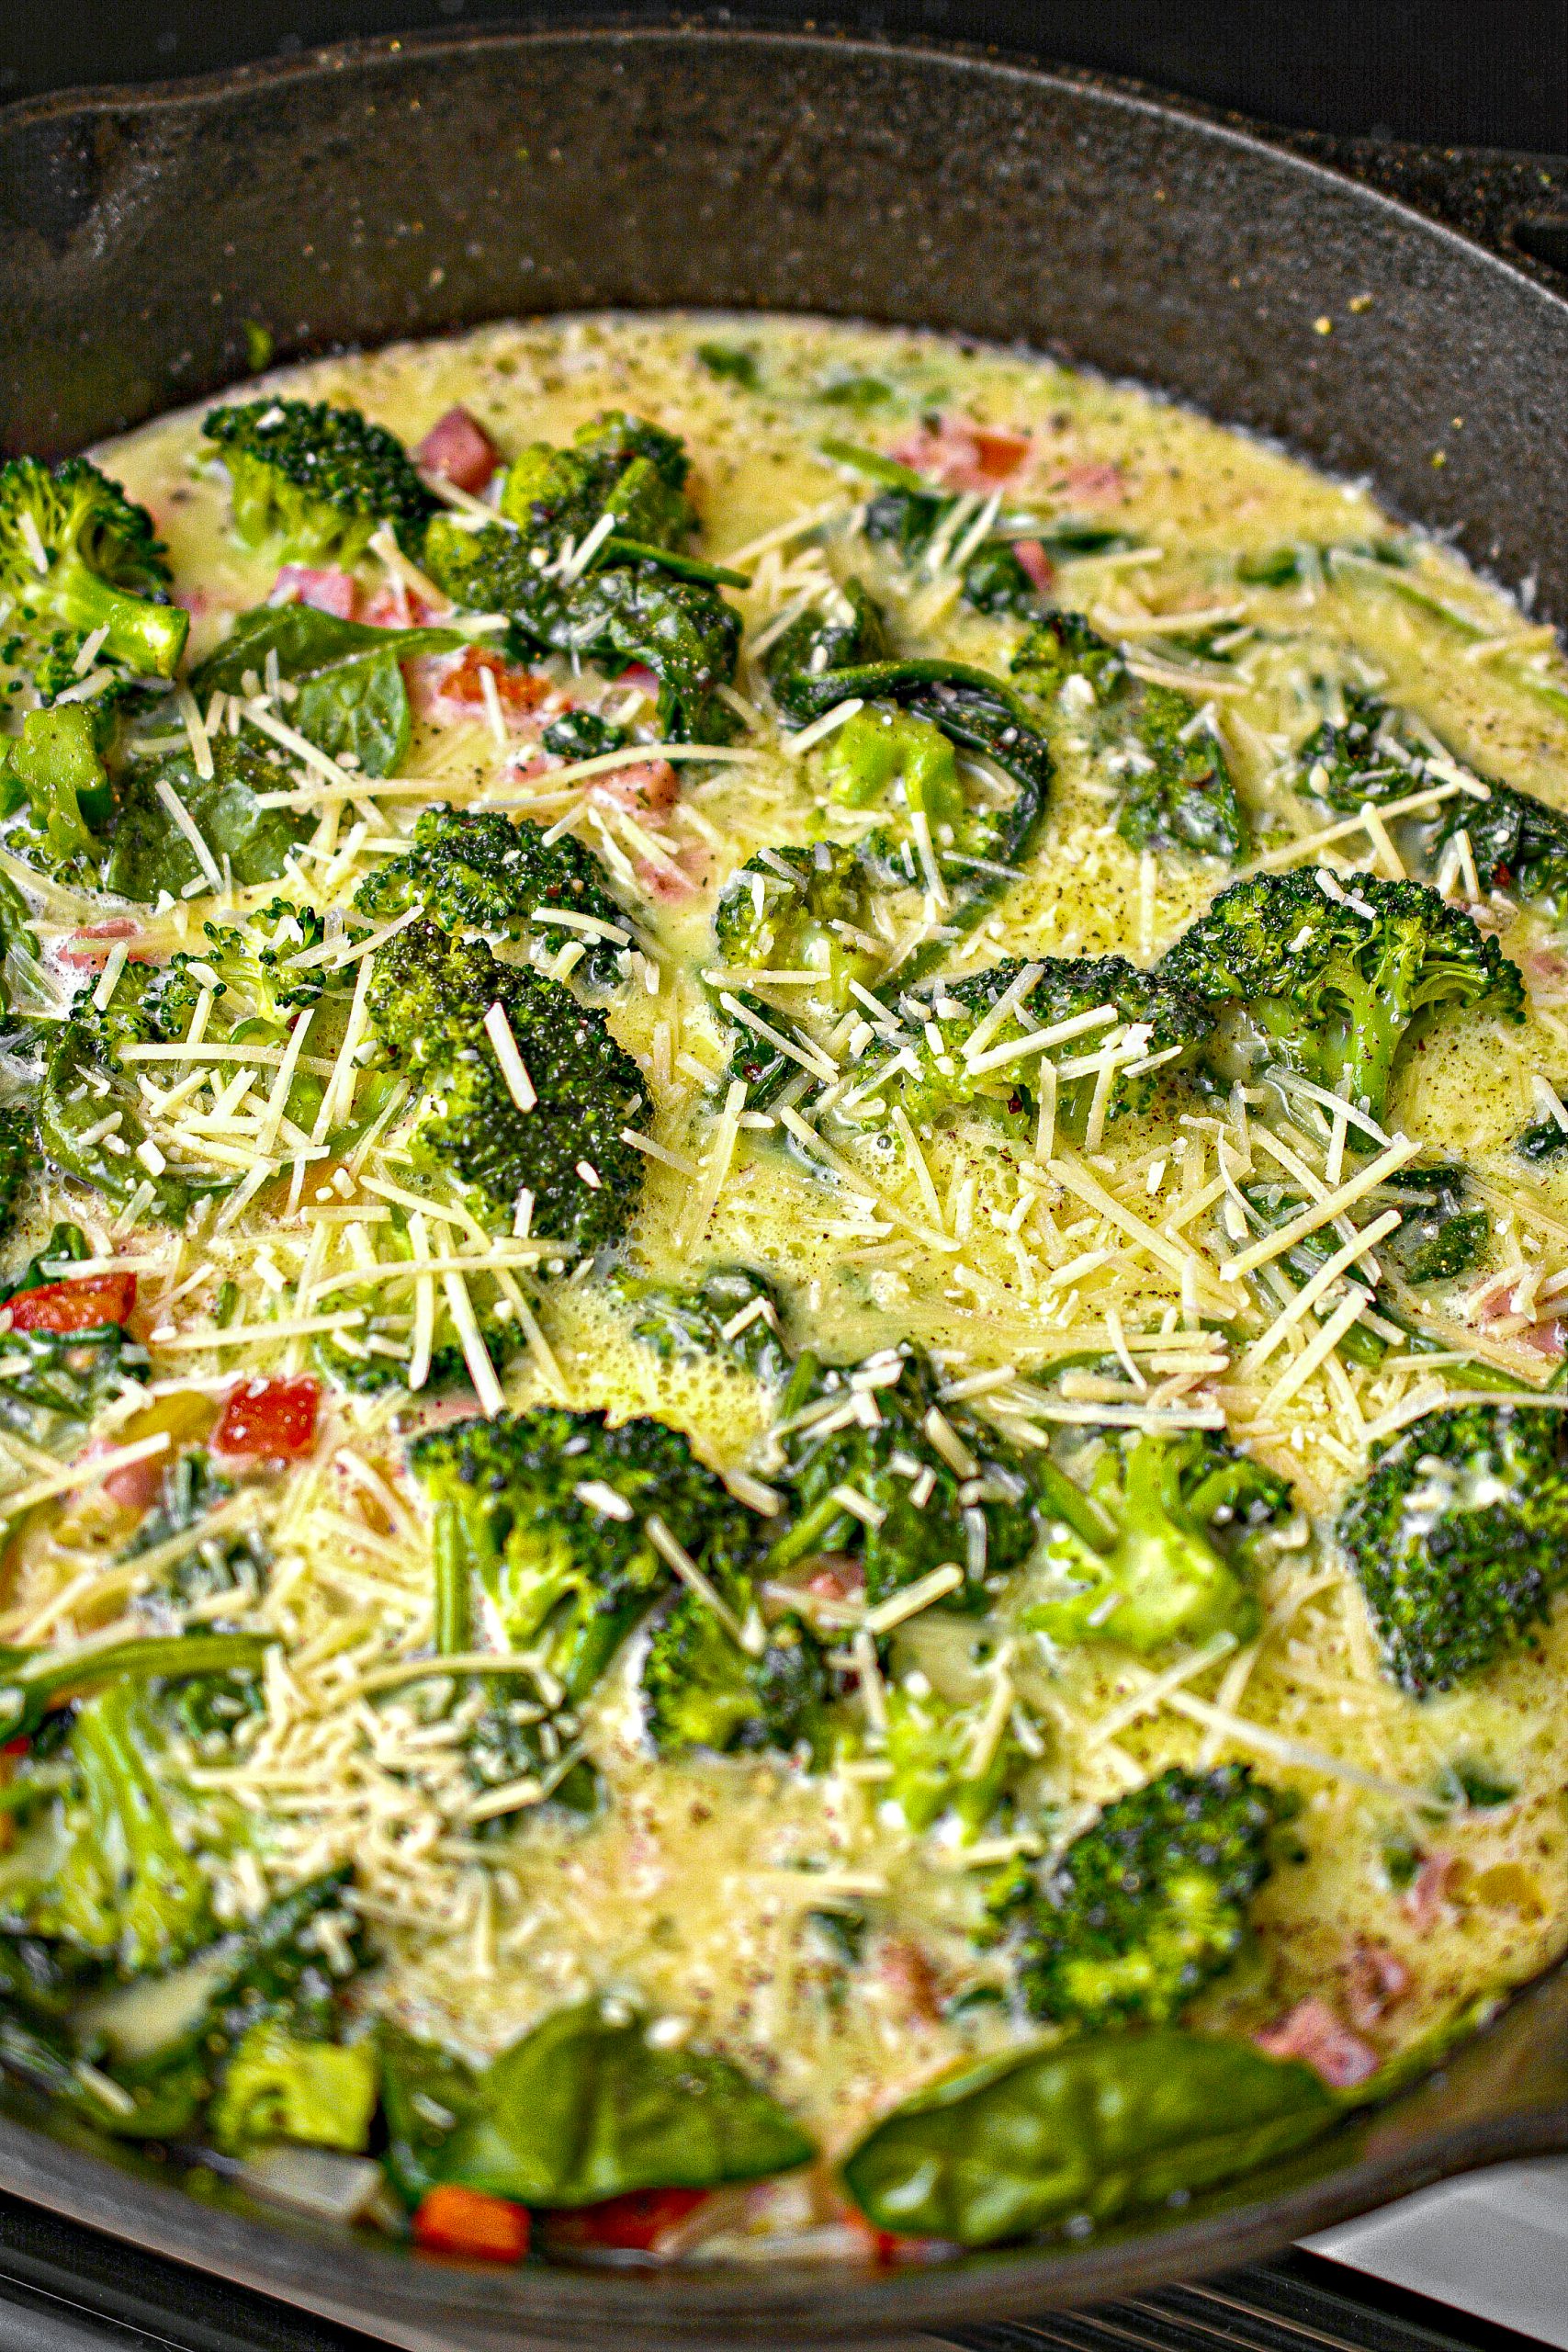 Sprinkle with the shredded parmesan.